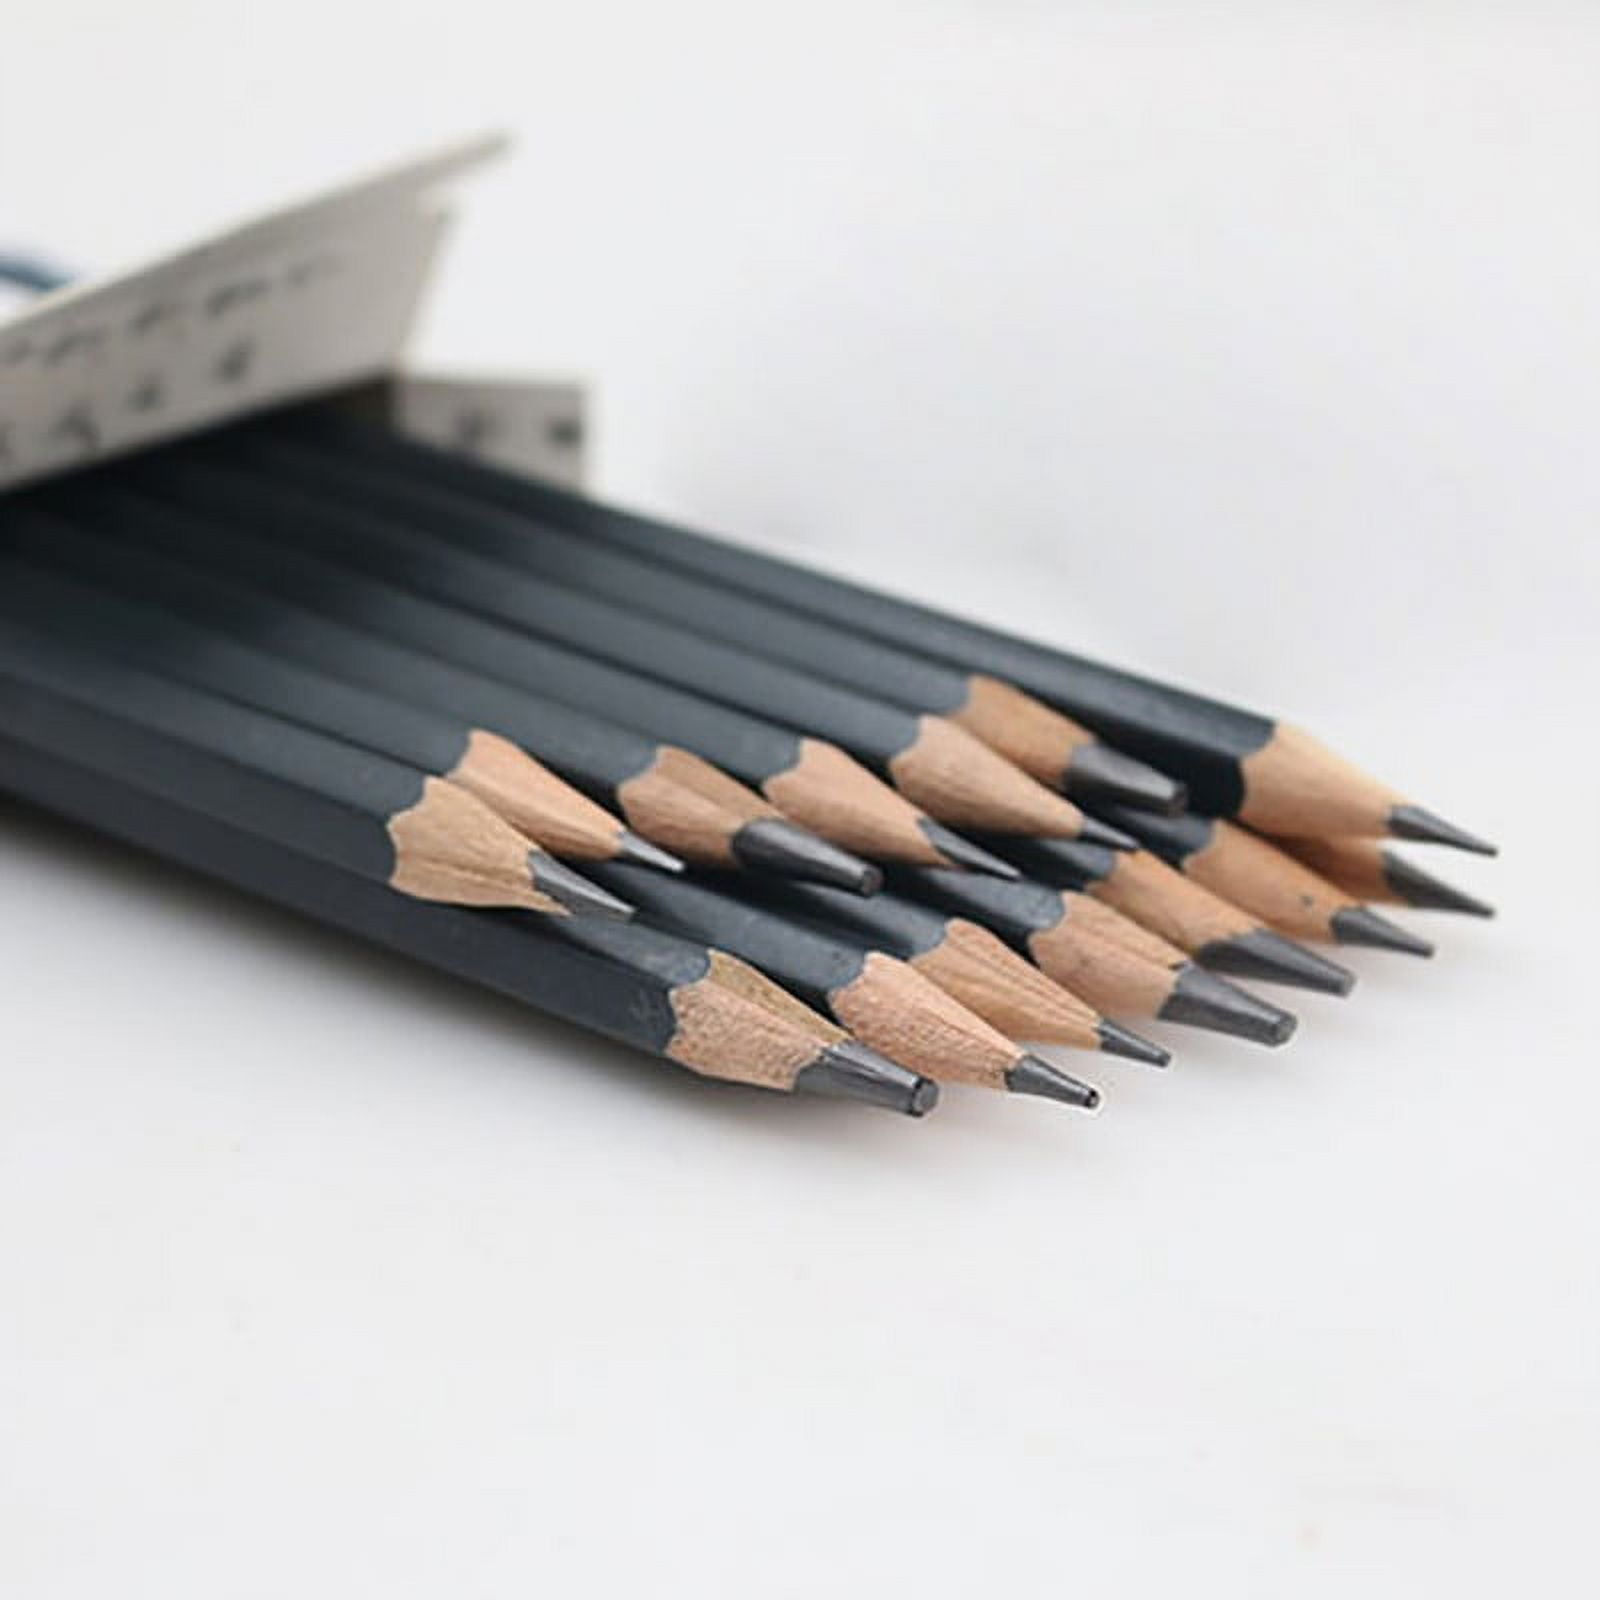 apcatio Fancy Art Sketching Pencils Set , Stationary Set for  Kids. Set of 12 pcs Pencil 